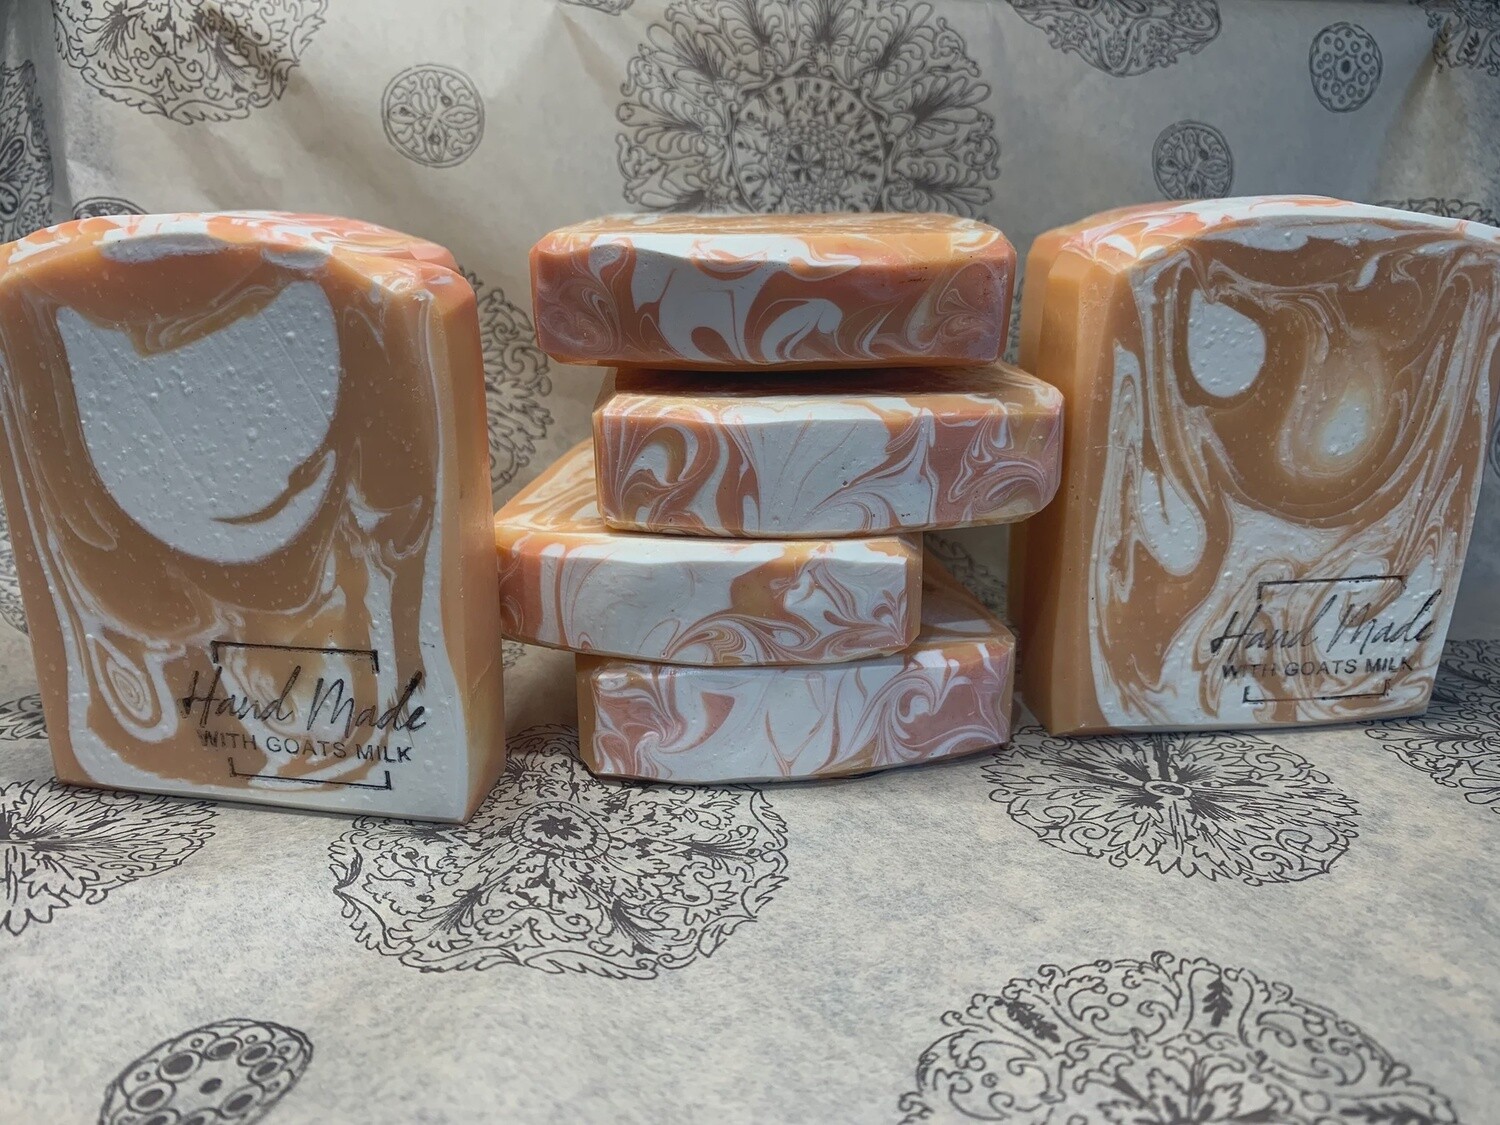 “Orangesicle" Goat Milk Soap Bar